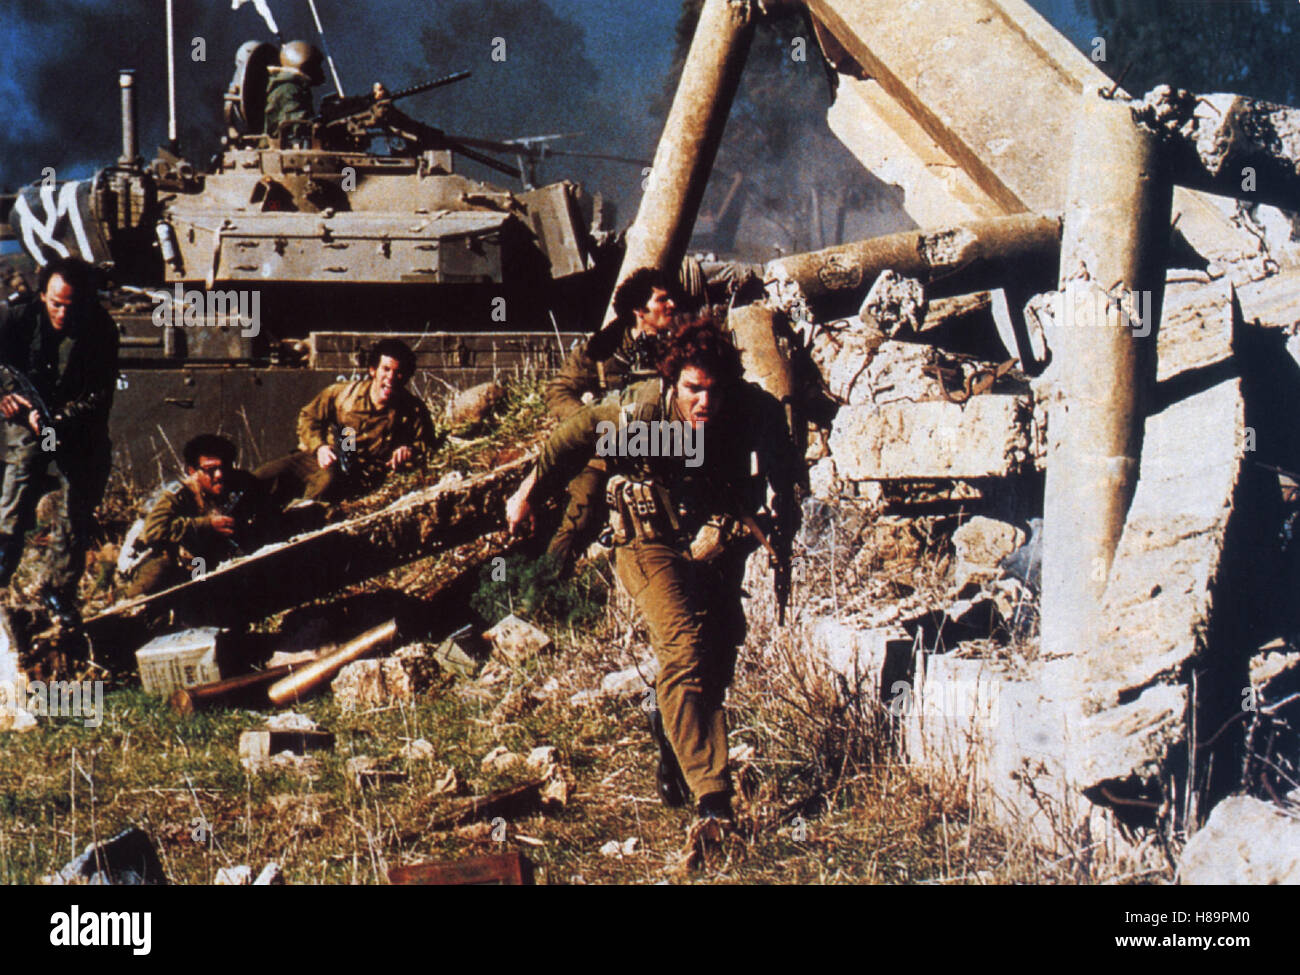 Am Tag von Kippur, (KIPPOUR) F- ISR 2000, Regie: Amos Gitai, URI KLAUZNER, TOMER RUSSO, LIRON LEVO, u.a. Key: Soldaten, Krieg Stock Photo